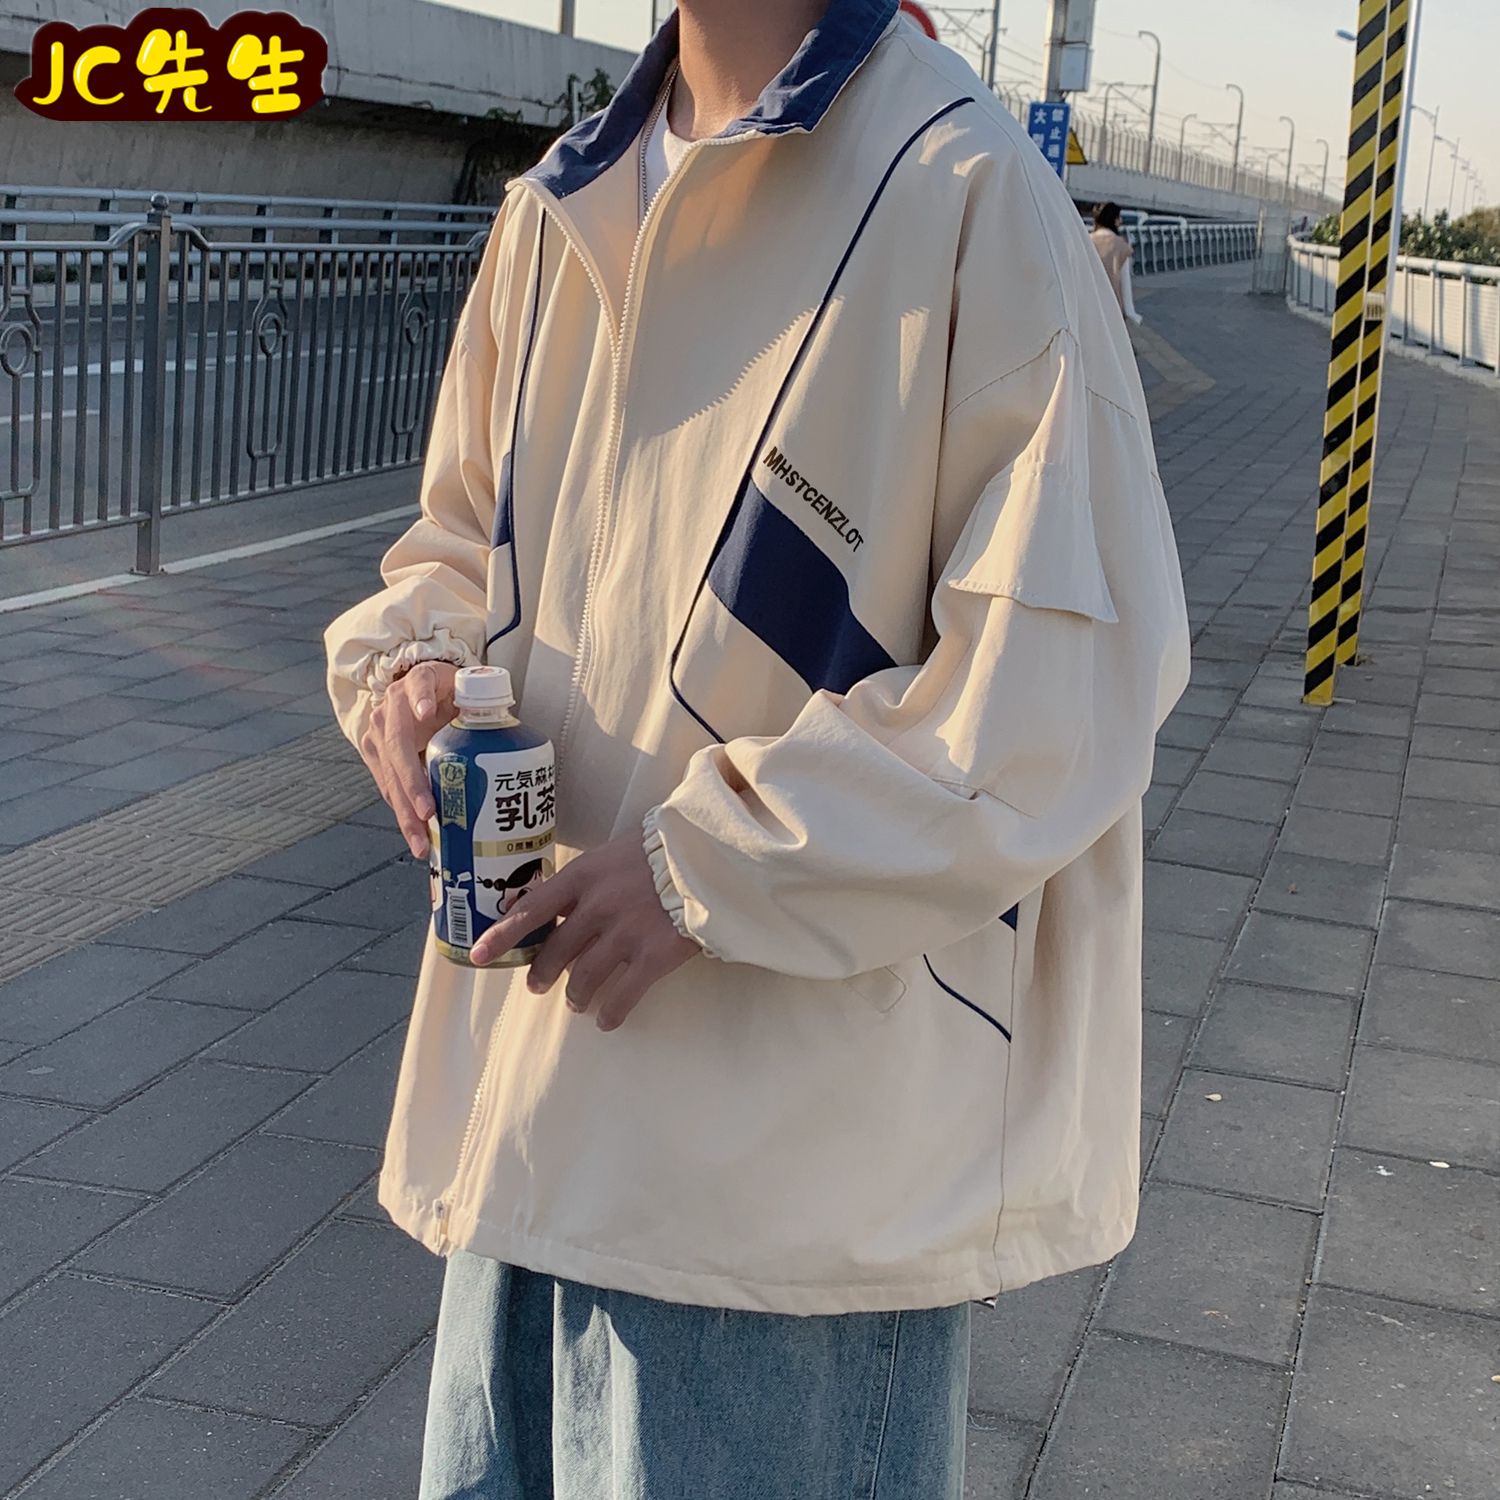 New jacket jacket men's spring Korean loose short retro Hong Kong Style Baseball Jacket color matching Lapel top fashion brand